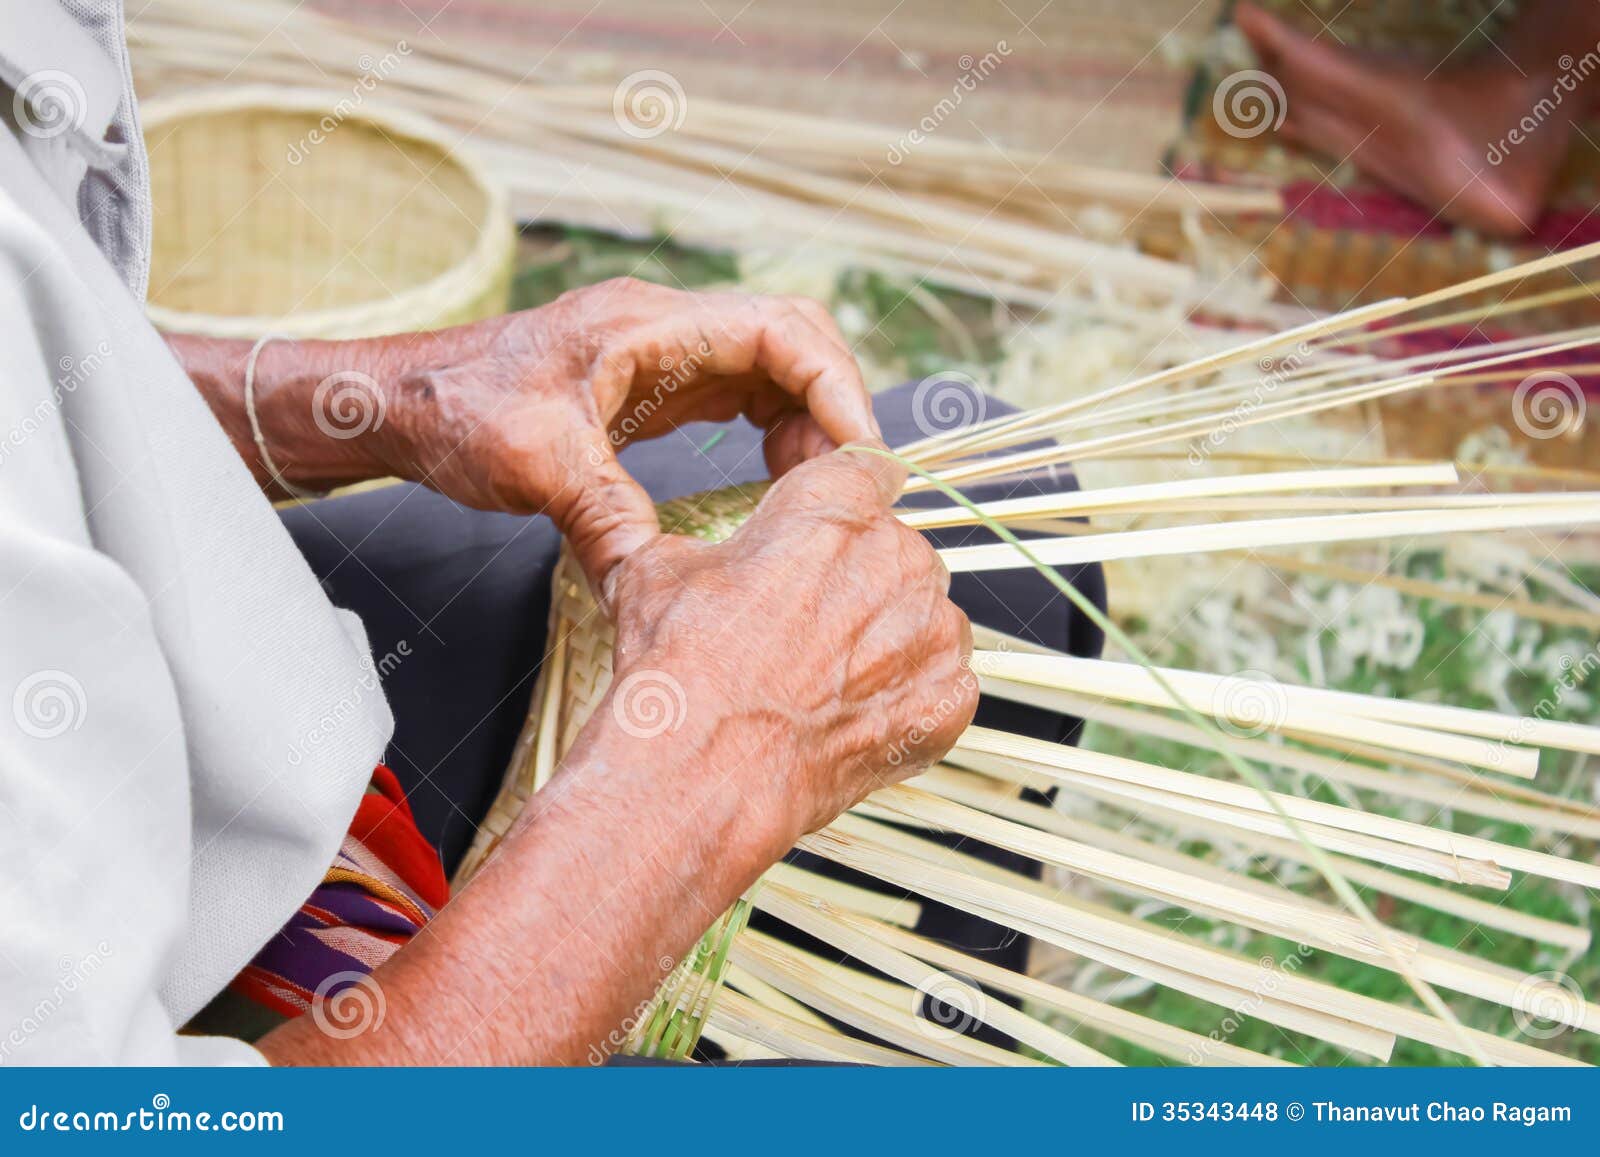 Basket weaving stock photo. Image of hands, nature, craft - 35343448